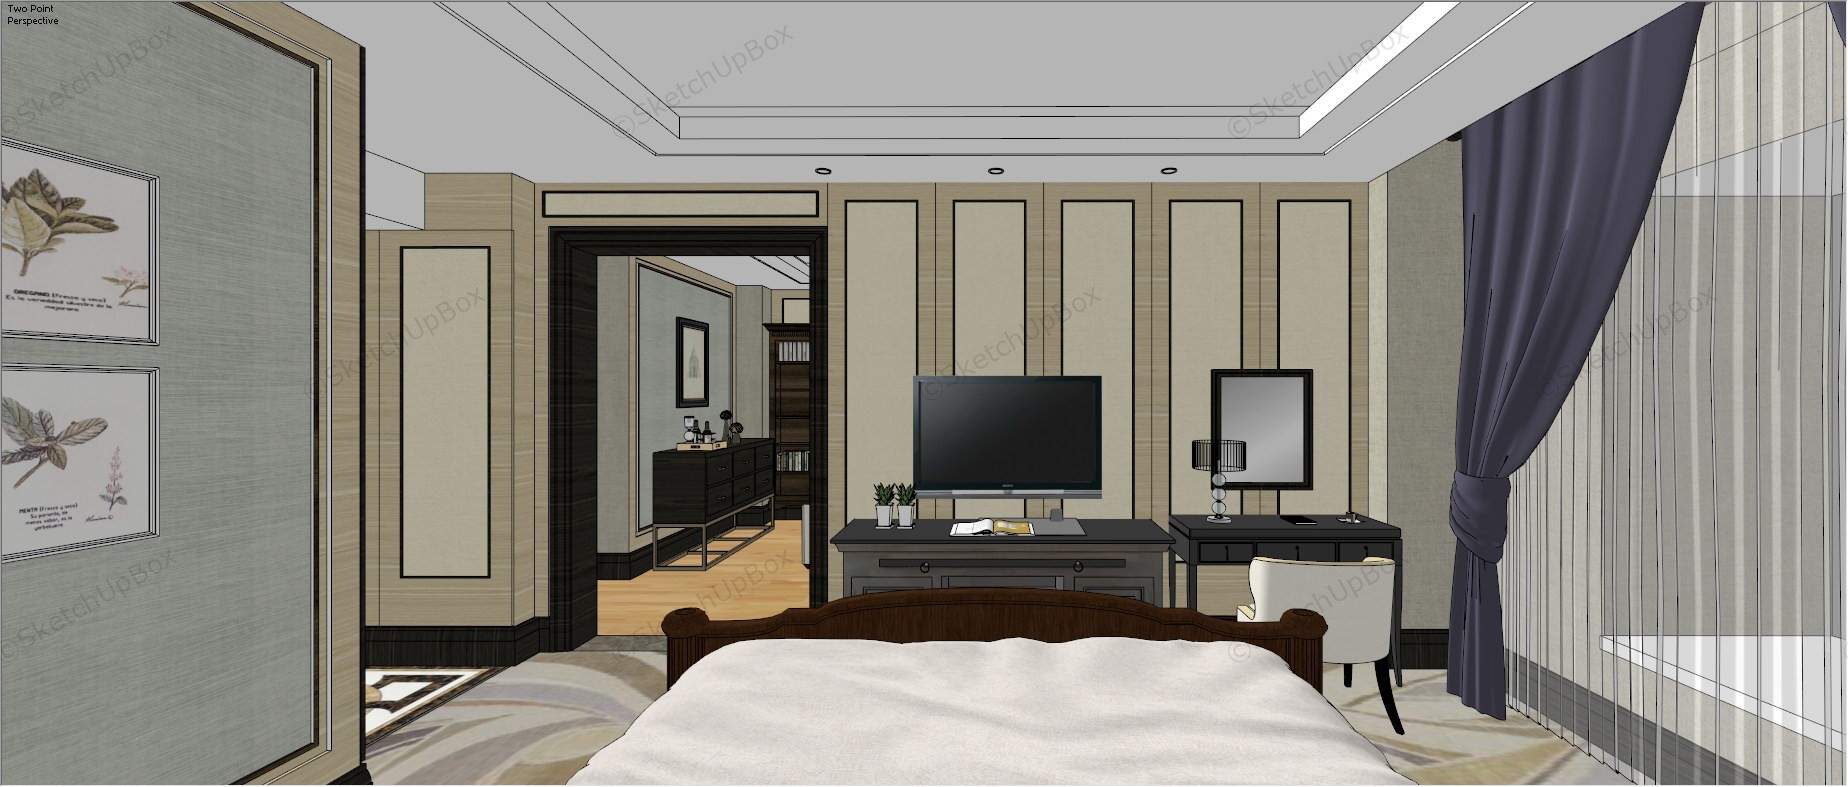 Executive Suite Hotel Room Design sketchup model preview - SketchupBox